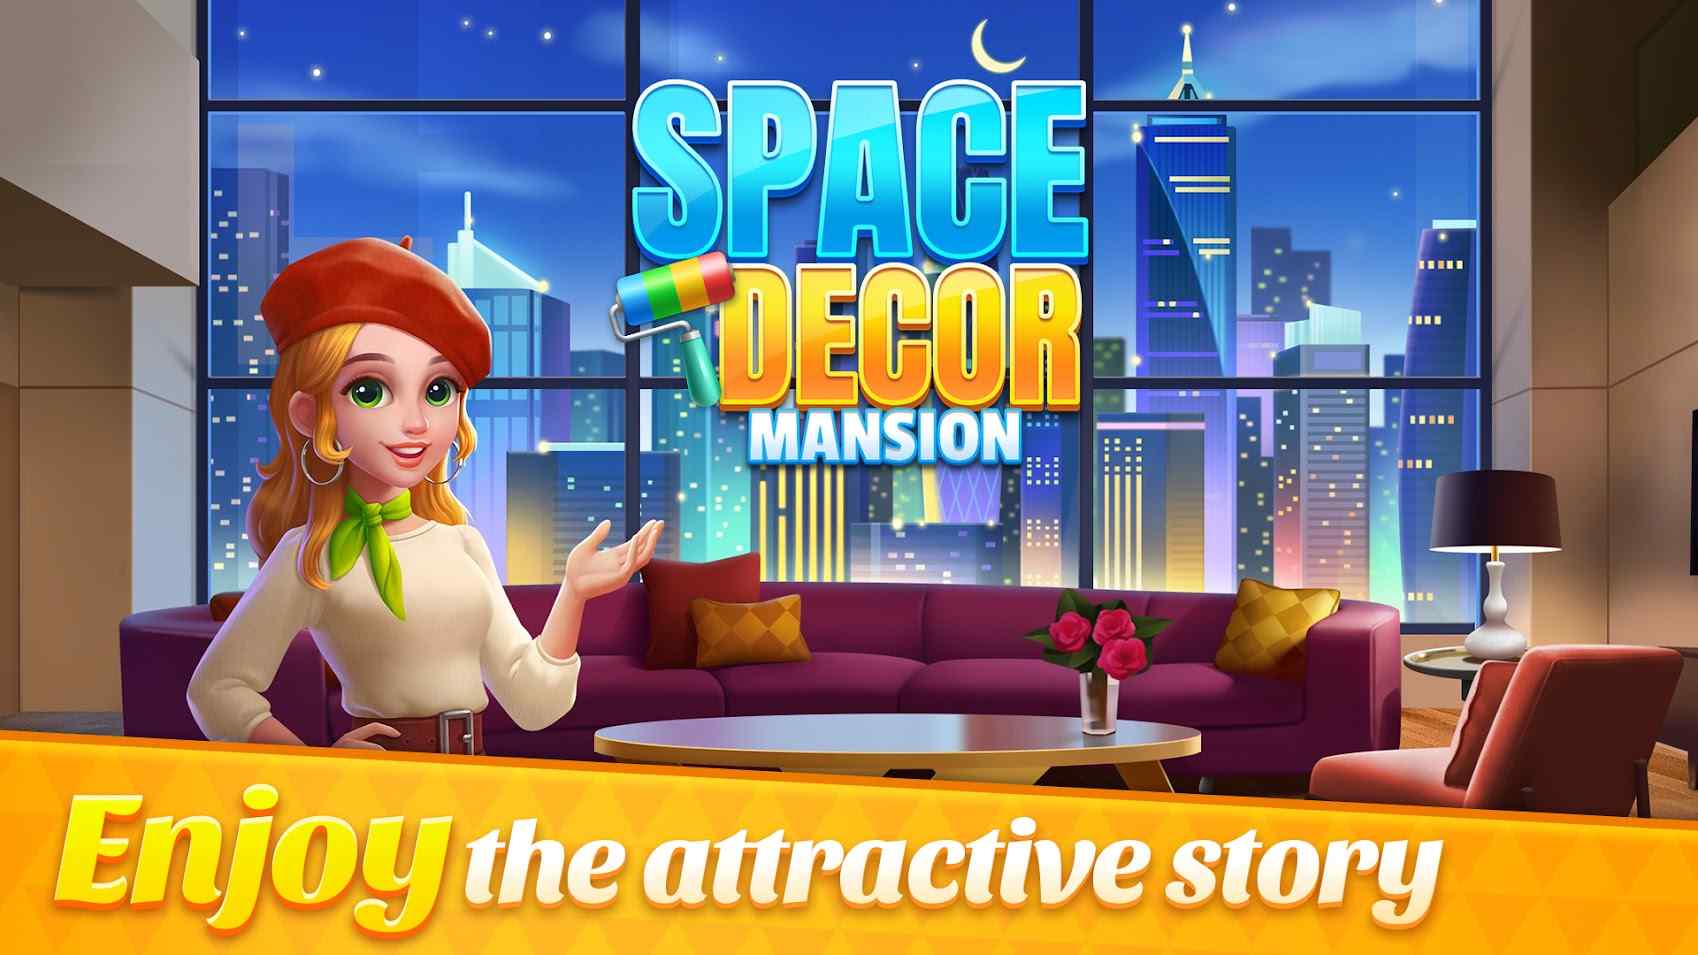 Space-Decor-Mansion-6.jpg